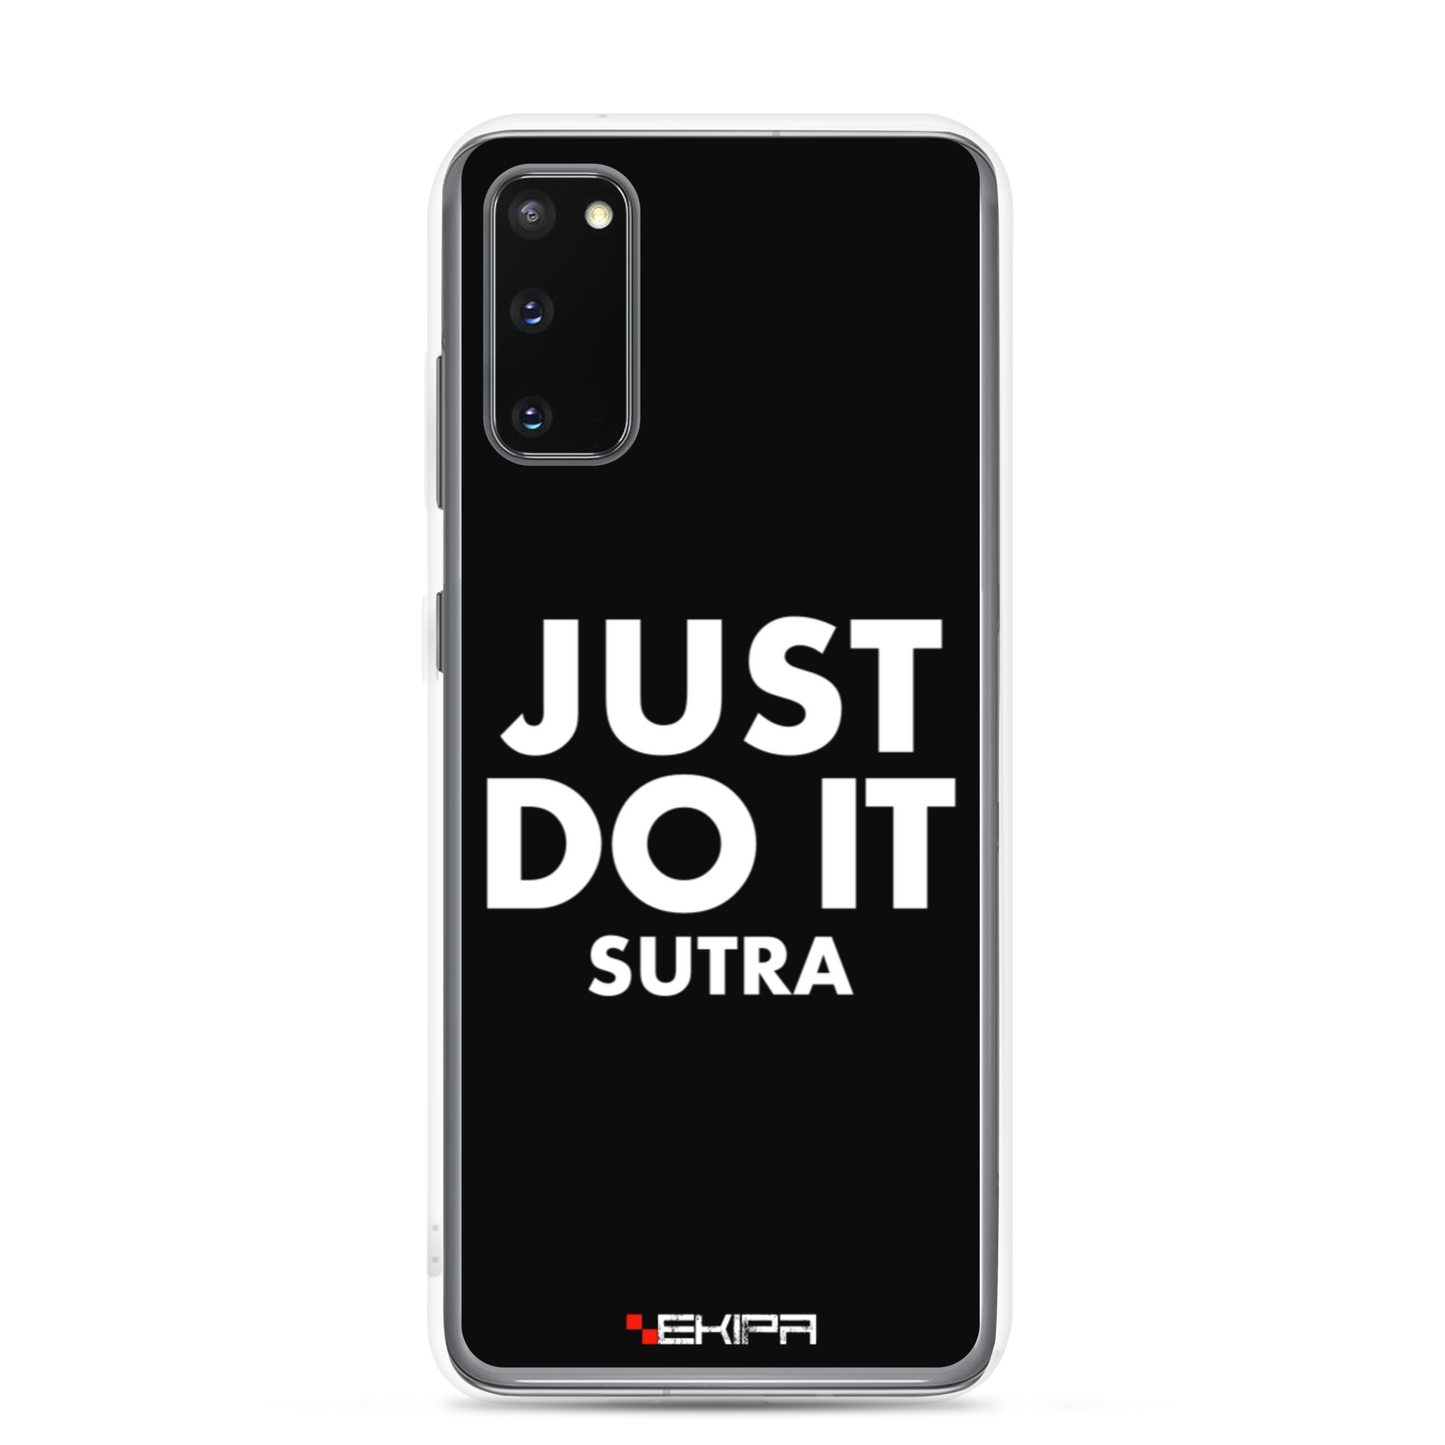 "Just do it sutra" - Samsung case